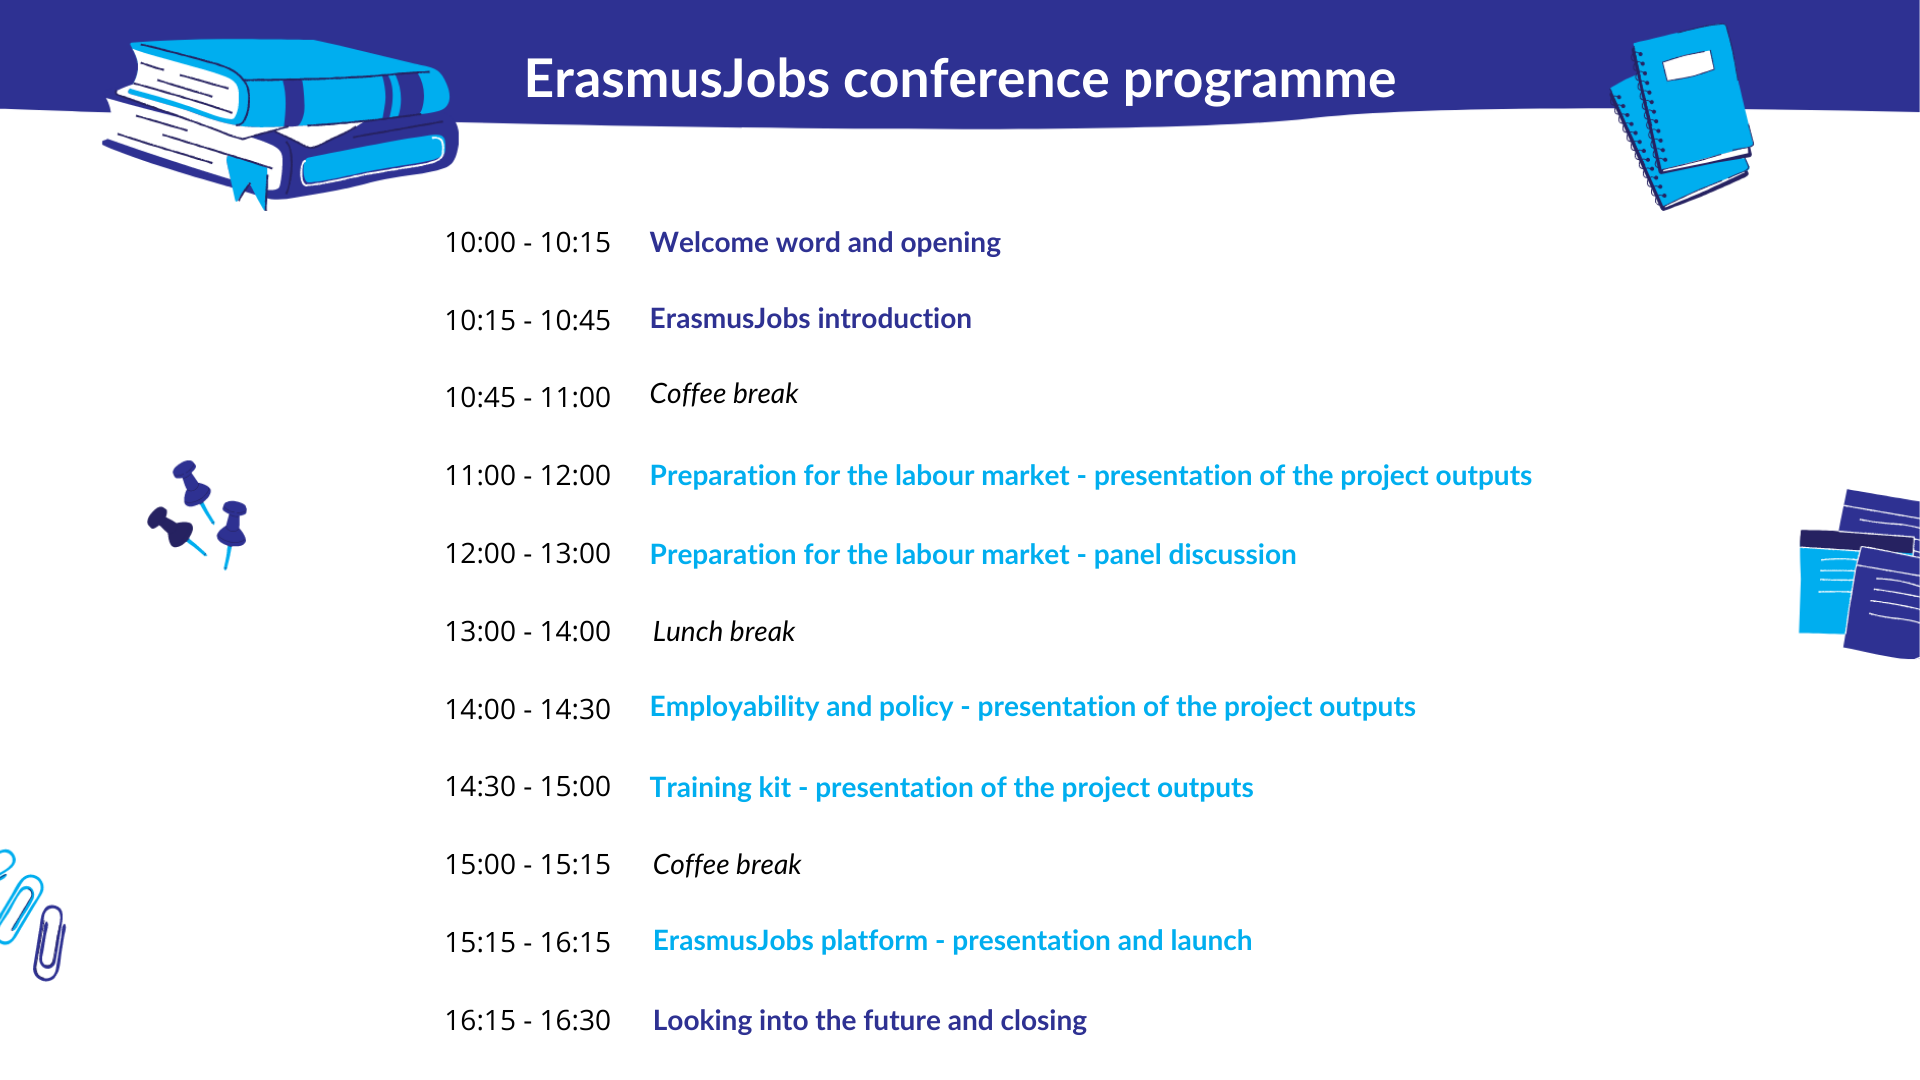 ErasmusJobs final conference programme